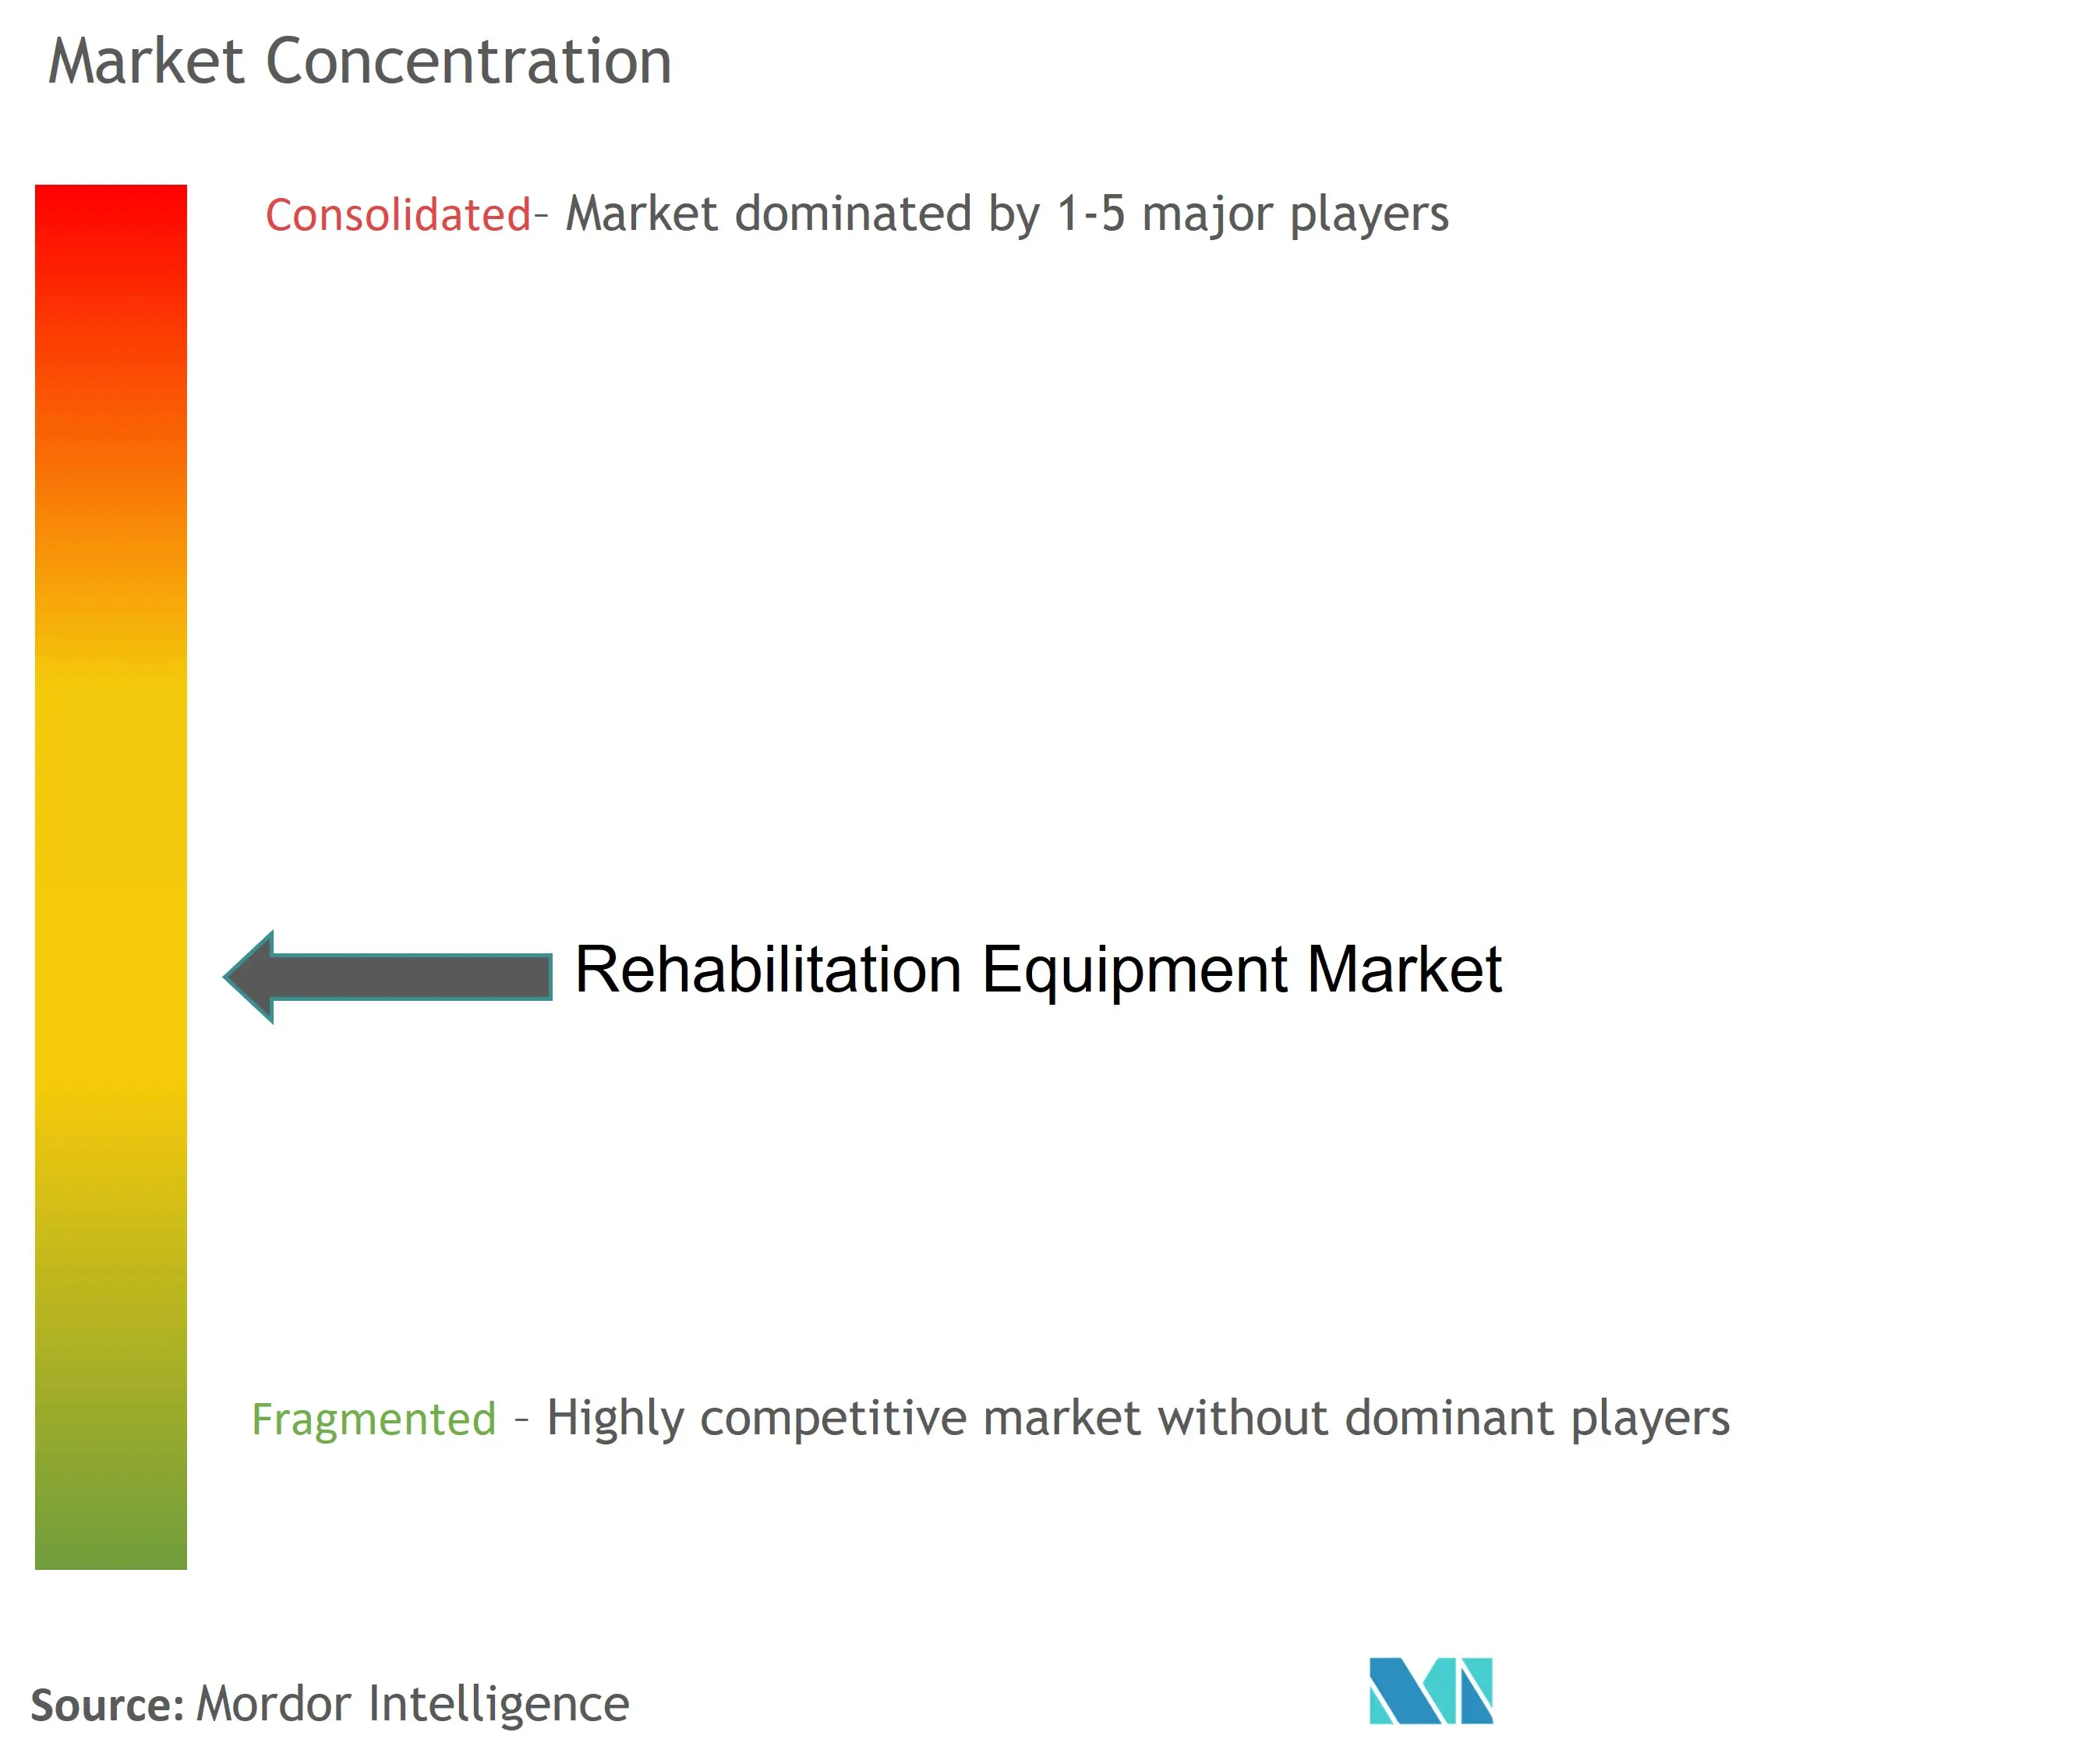 Rehabilitation Equipment Market Concentration